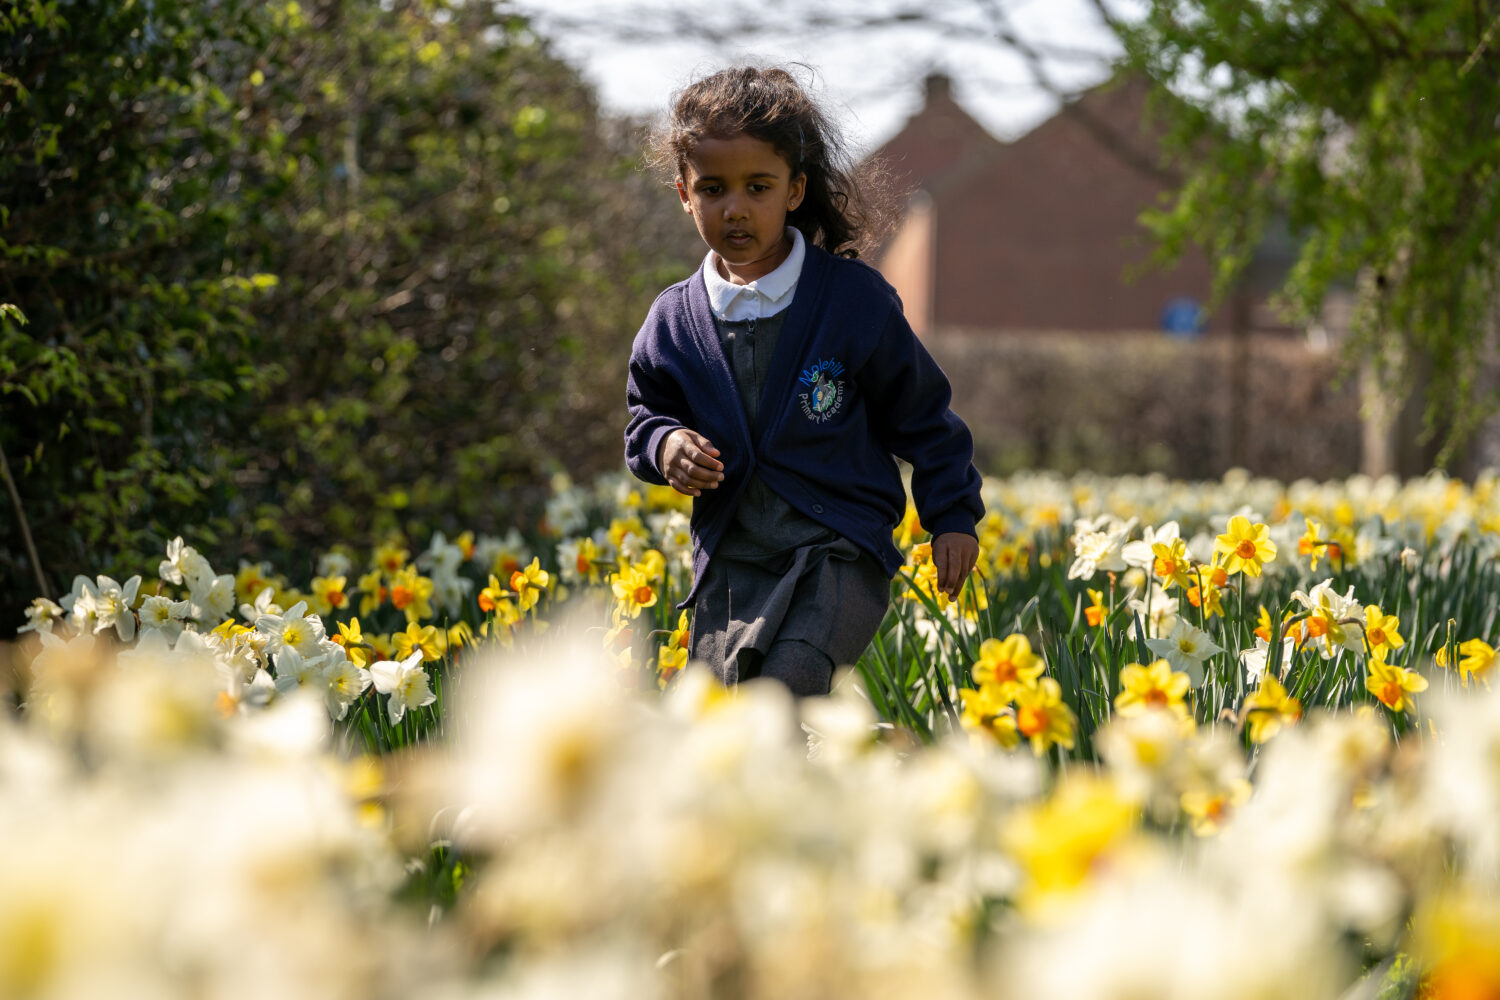 A Molehill Primary student walking through daffodils